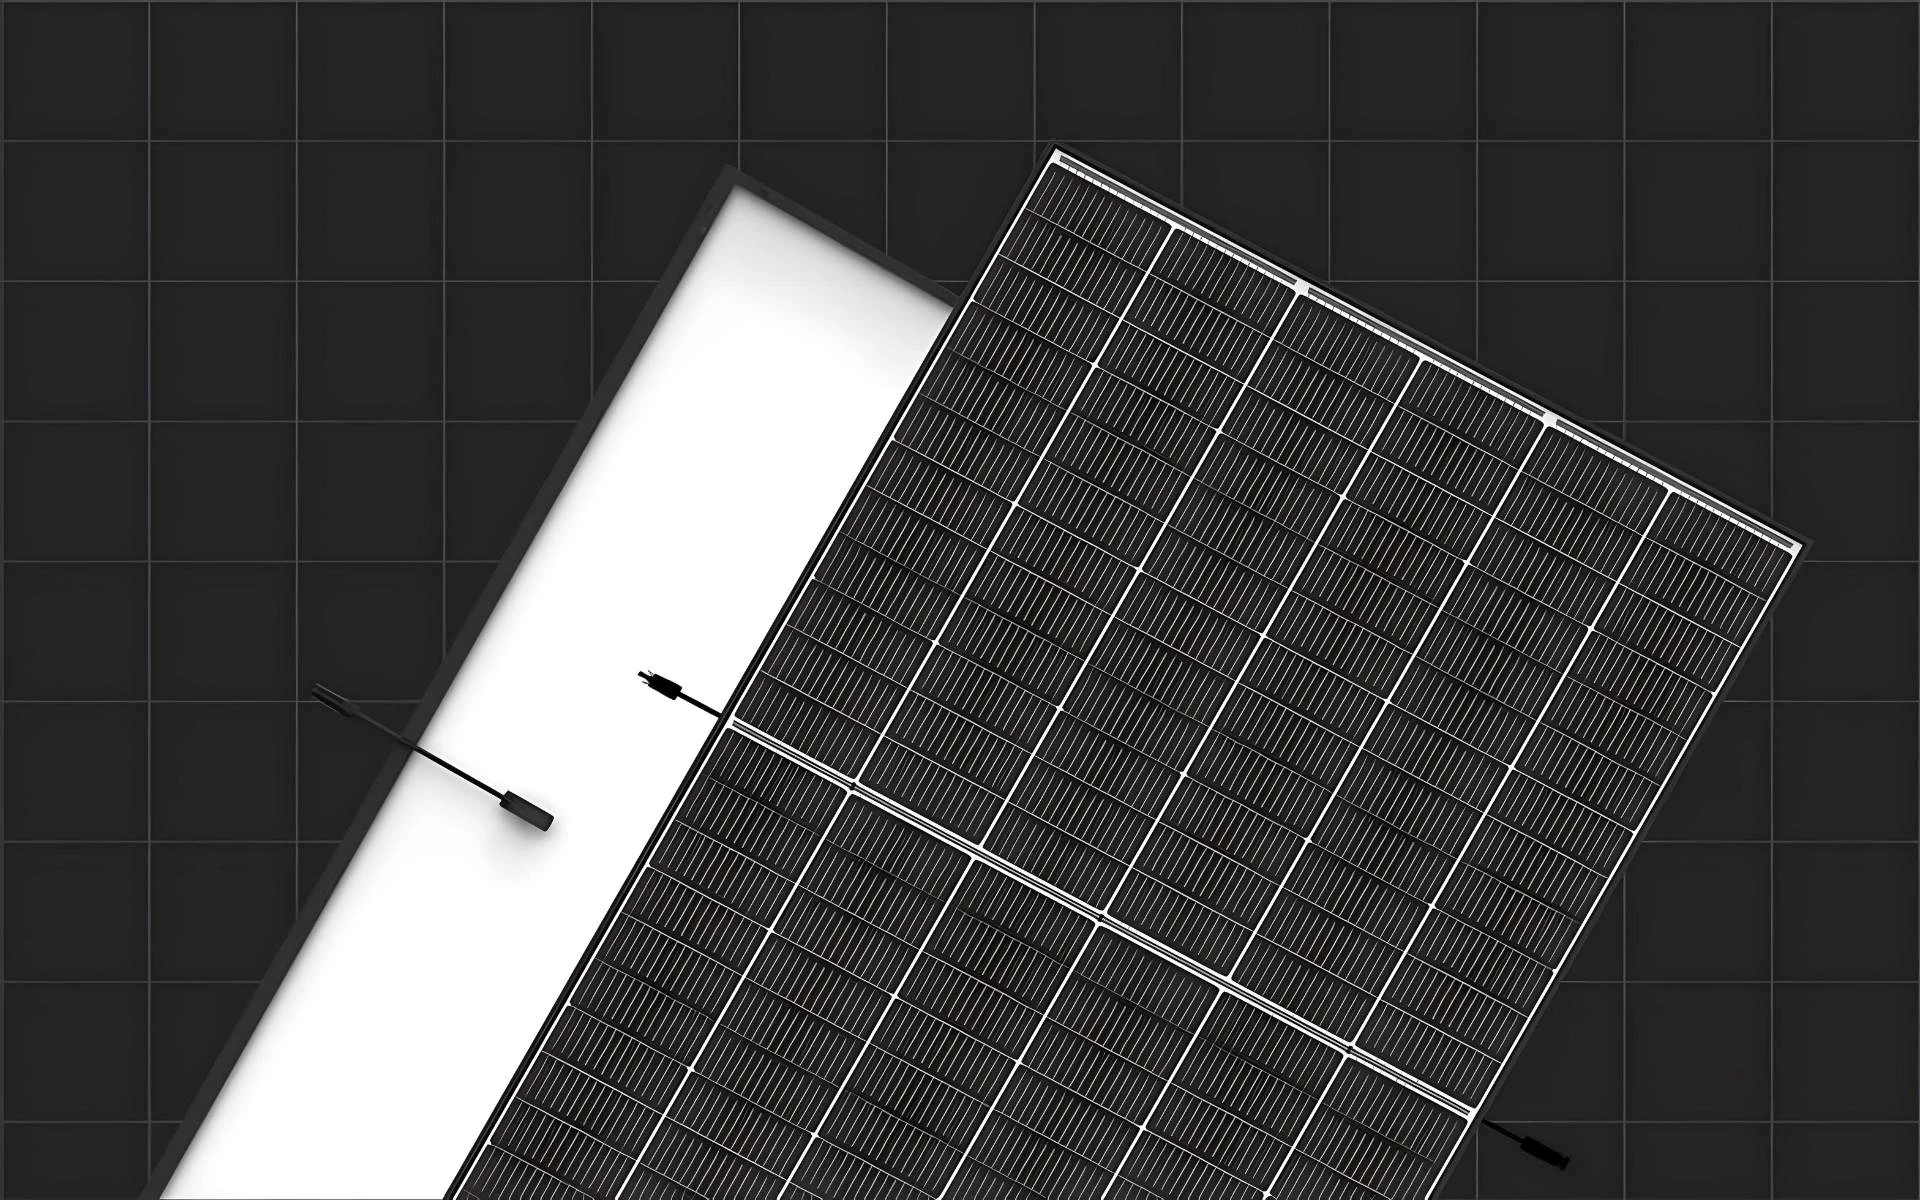 Trina Solar Vertex S+ Solarpanel 440W Doppelglas - TSM-440-NEG9R.28 - Solarmodul